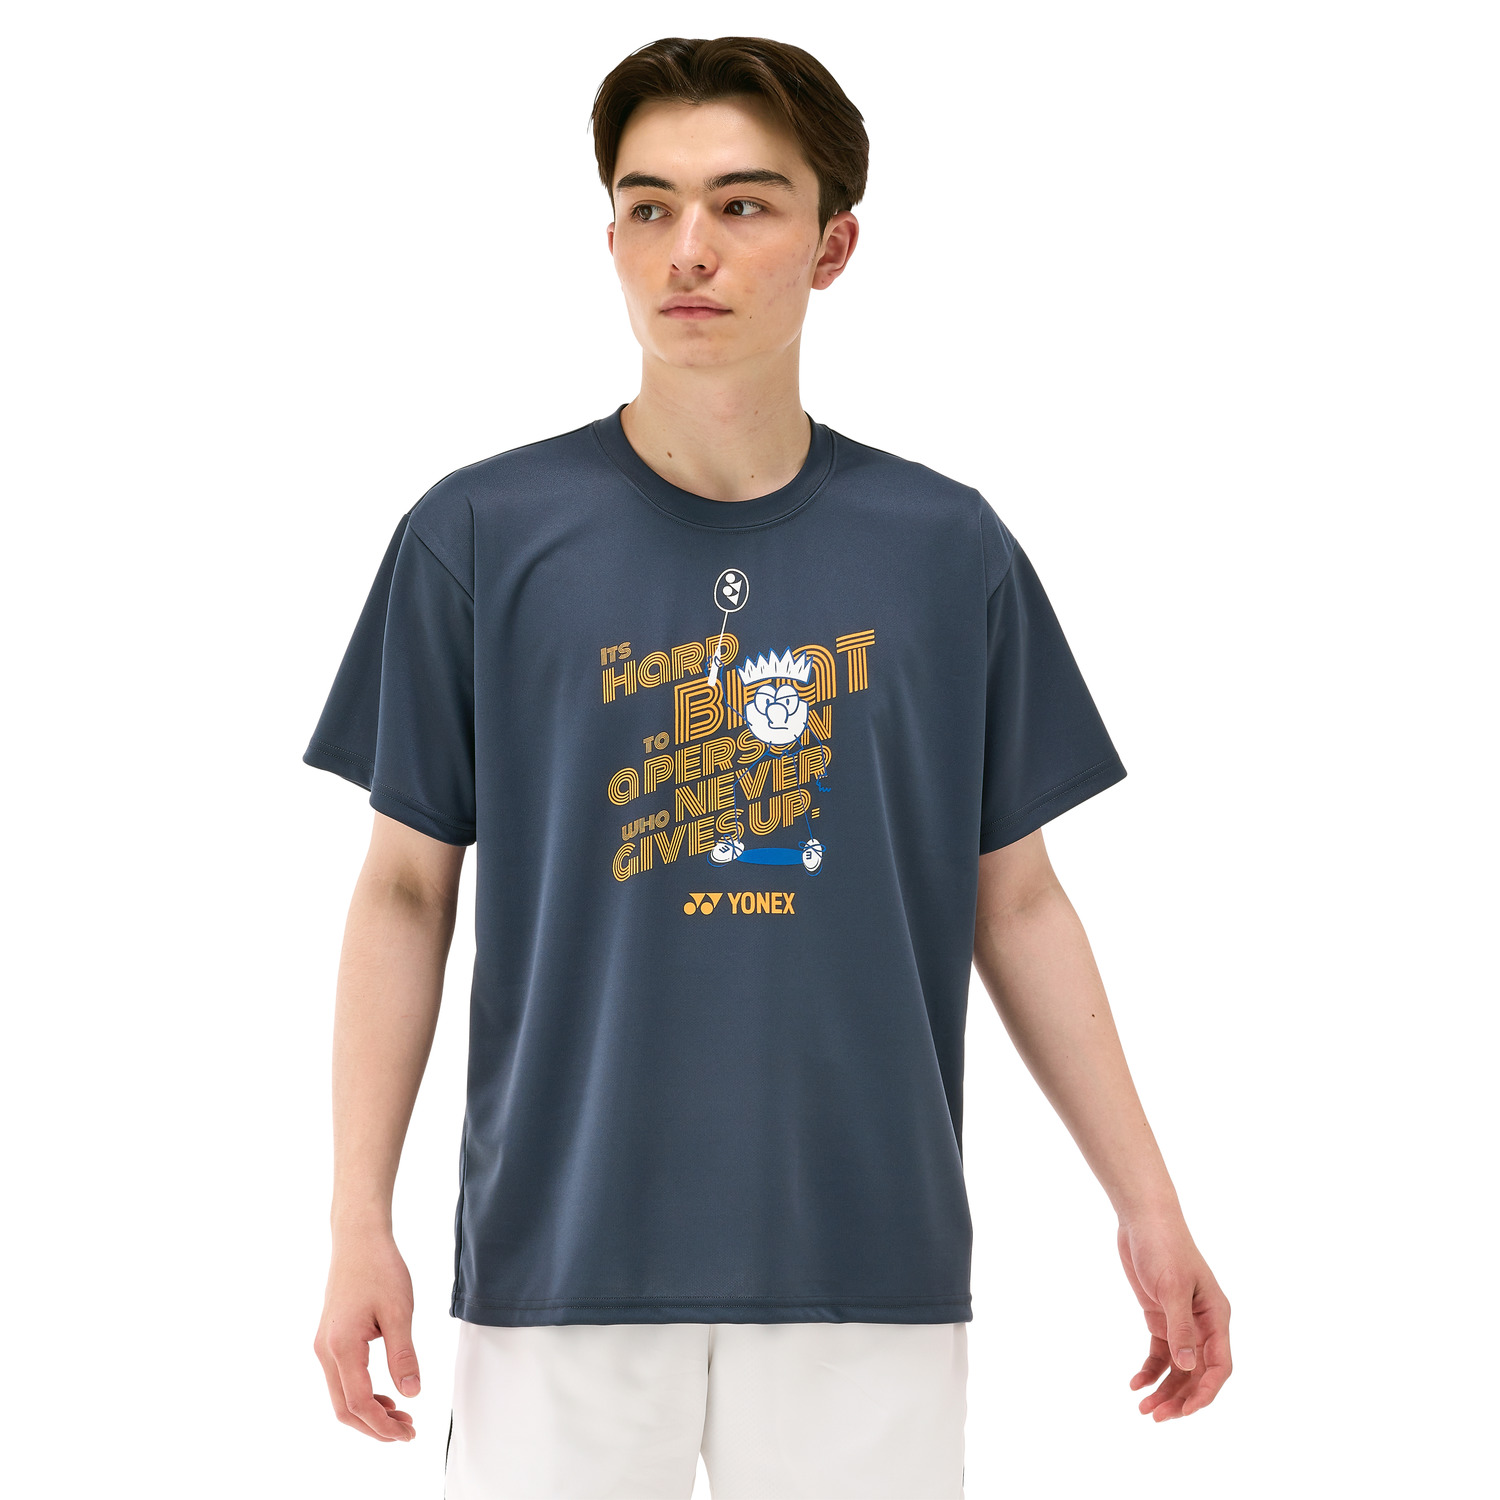 Yonex Badminton/ Tennis Sports Shirt 16726Y Charcoal (Made in Japan) MEN'S